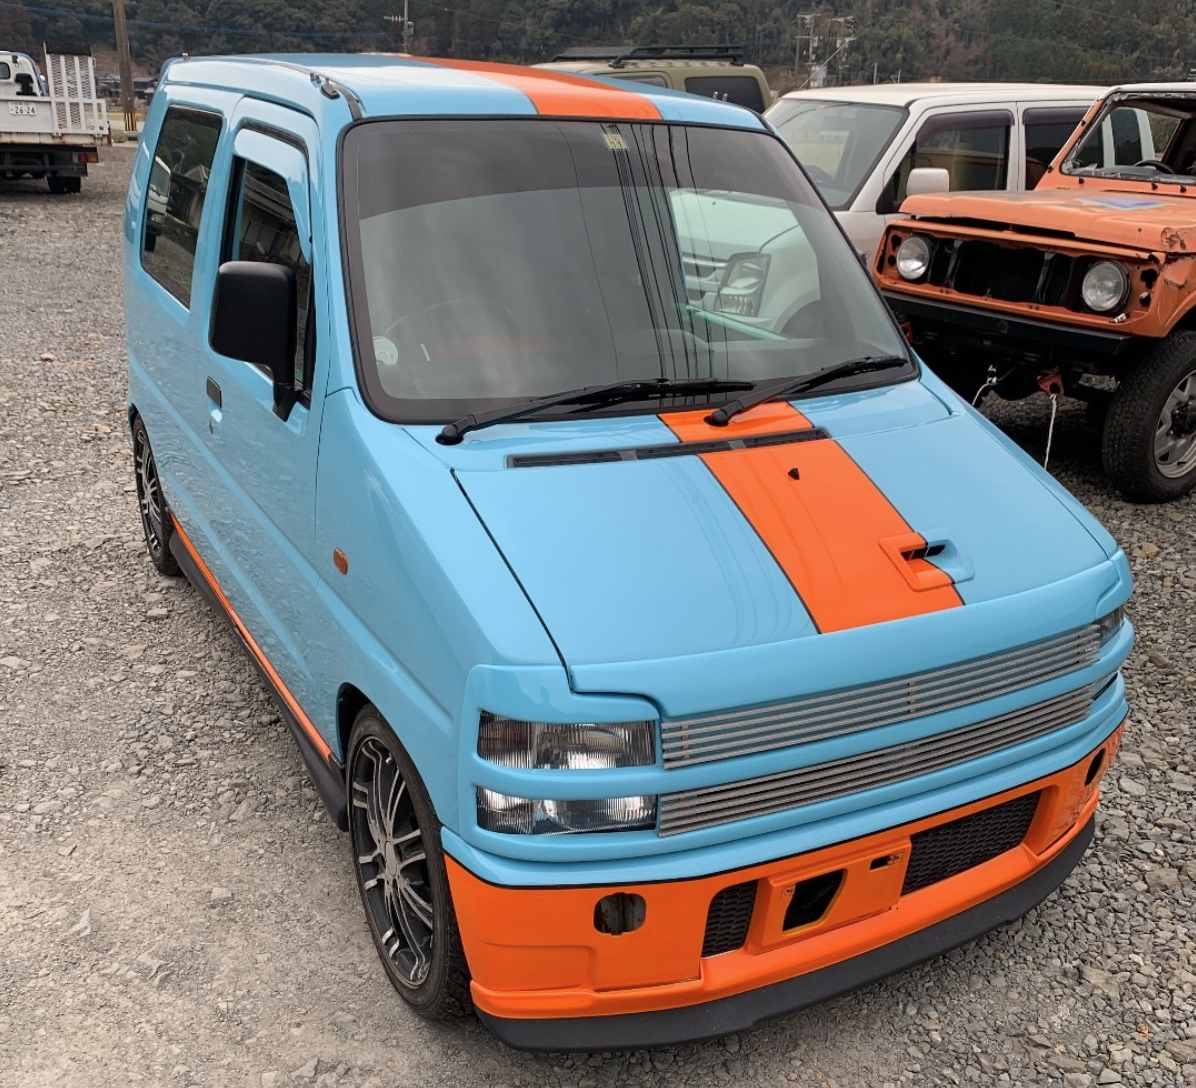 1995 Suzuki WagonR - Coming Soon